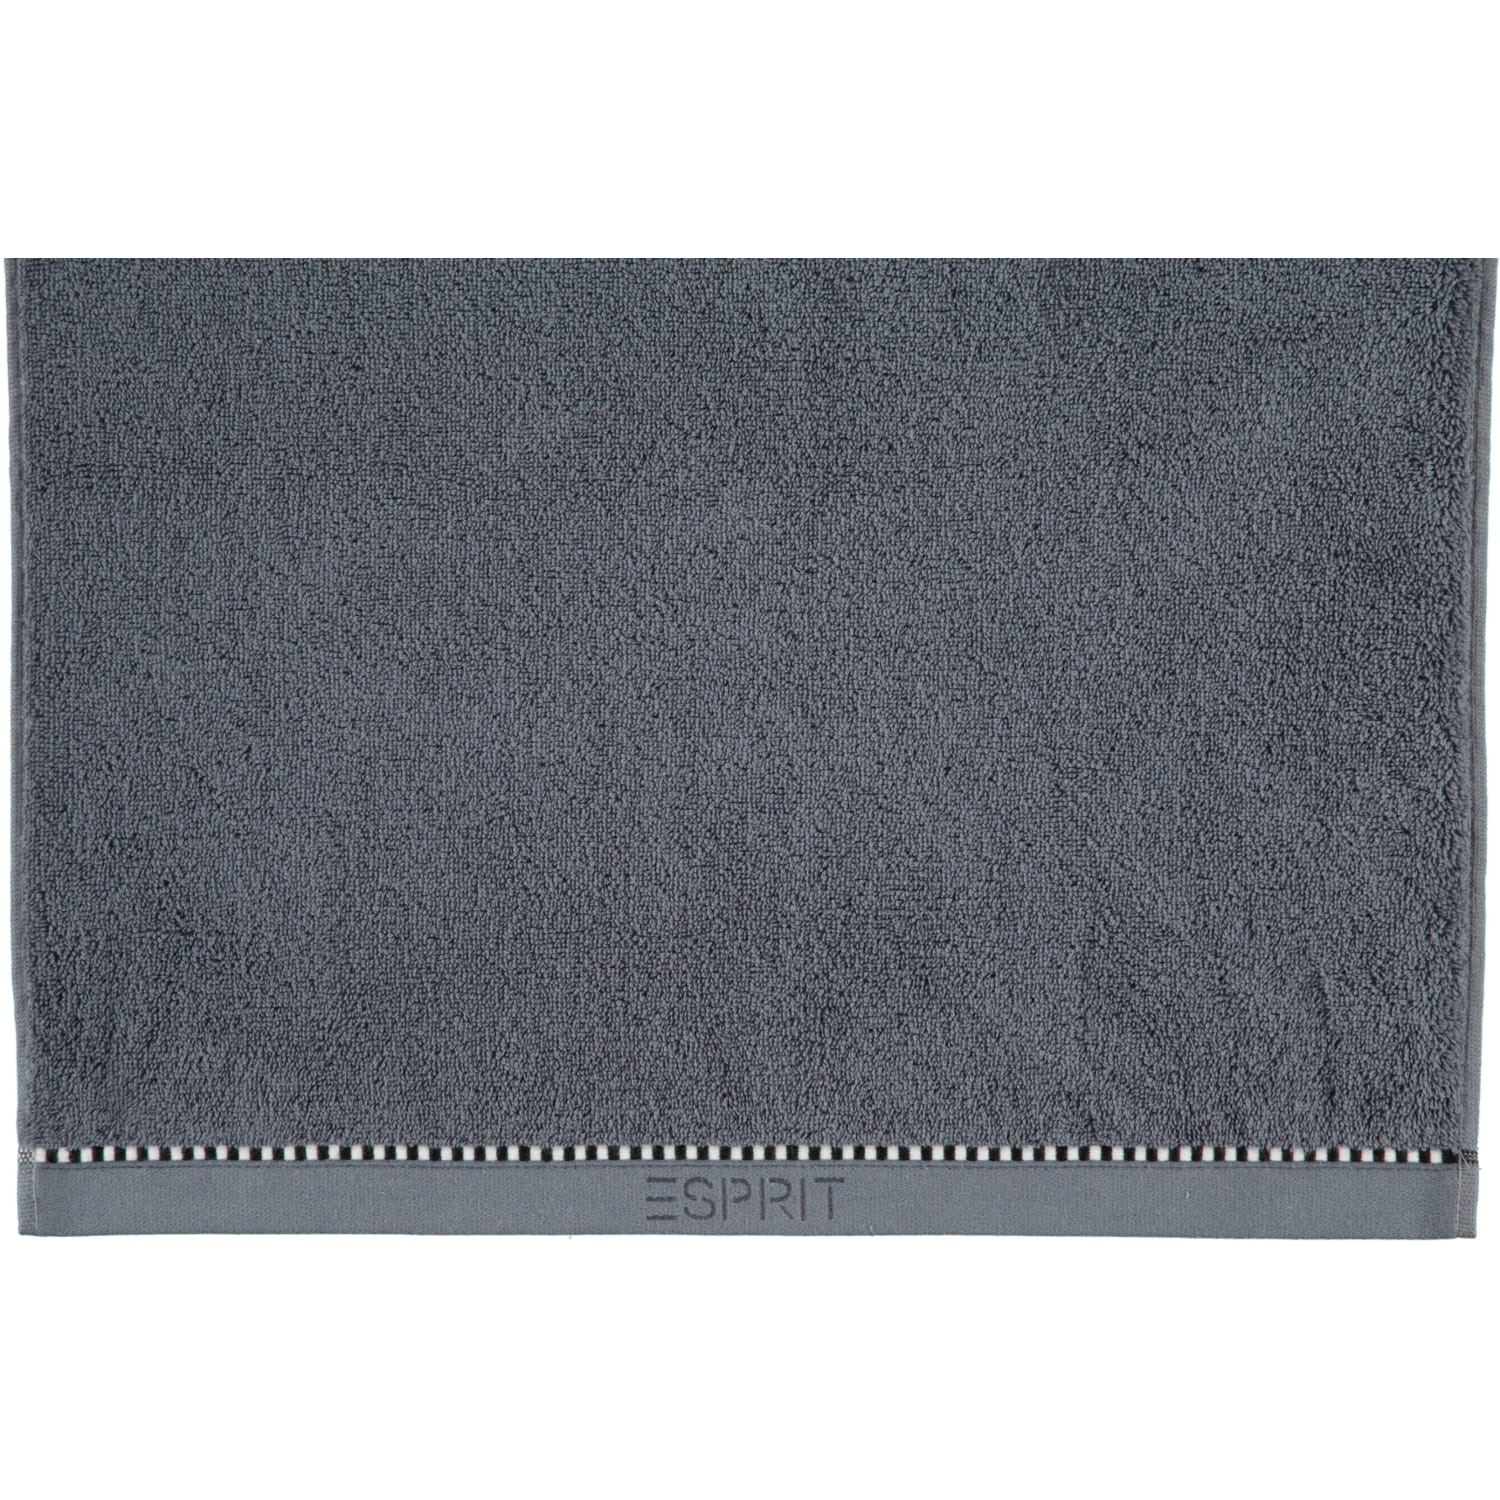 Esprit Box Solid - Farbe: grey steel - 740 | ESPRIT Handtücher | ESPRIT |  Marken | Badetücher